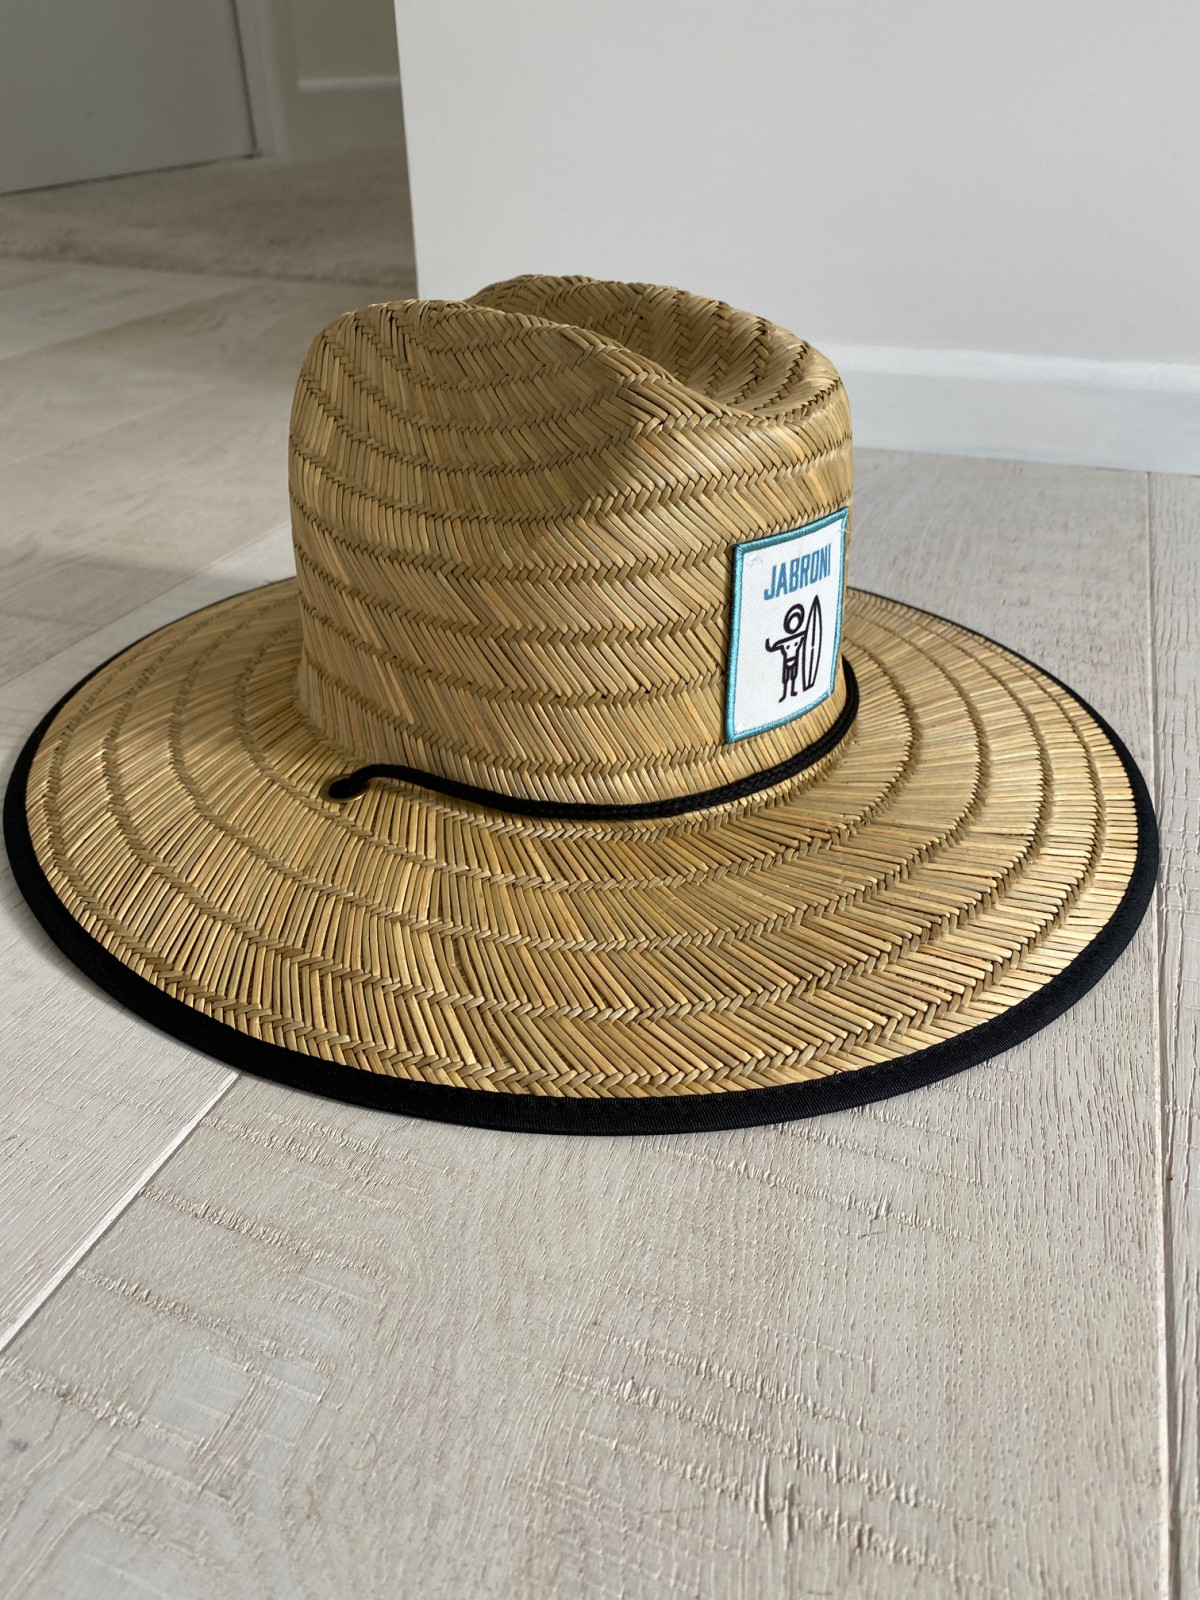 Custom Straw Hats Straw Hat Print Under Brim Custom Print Straw Hat Nz Withers And Co